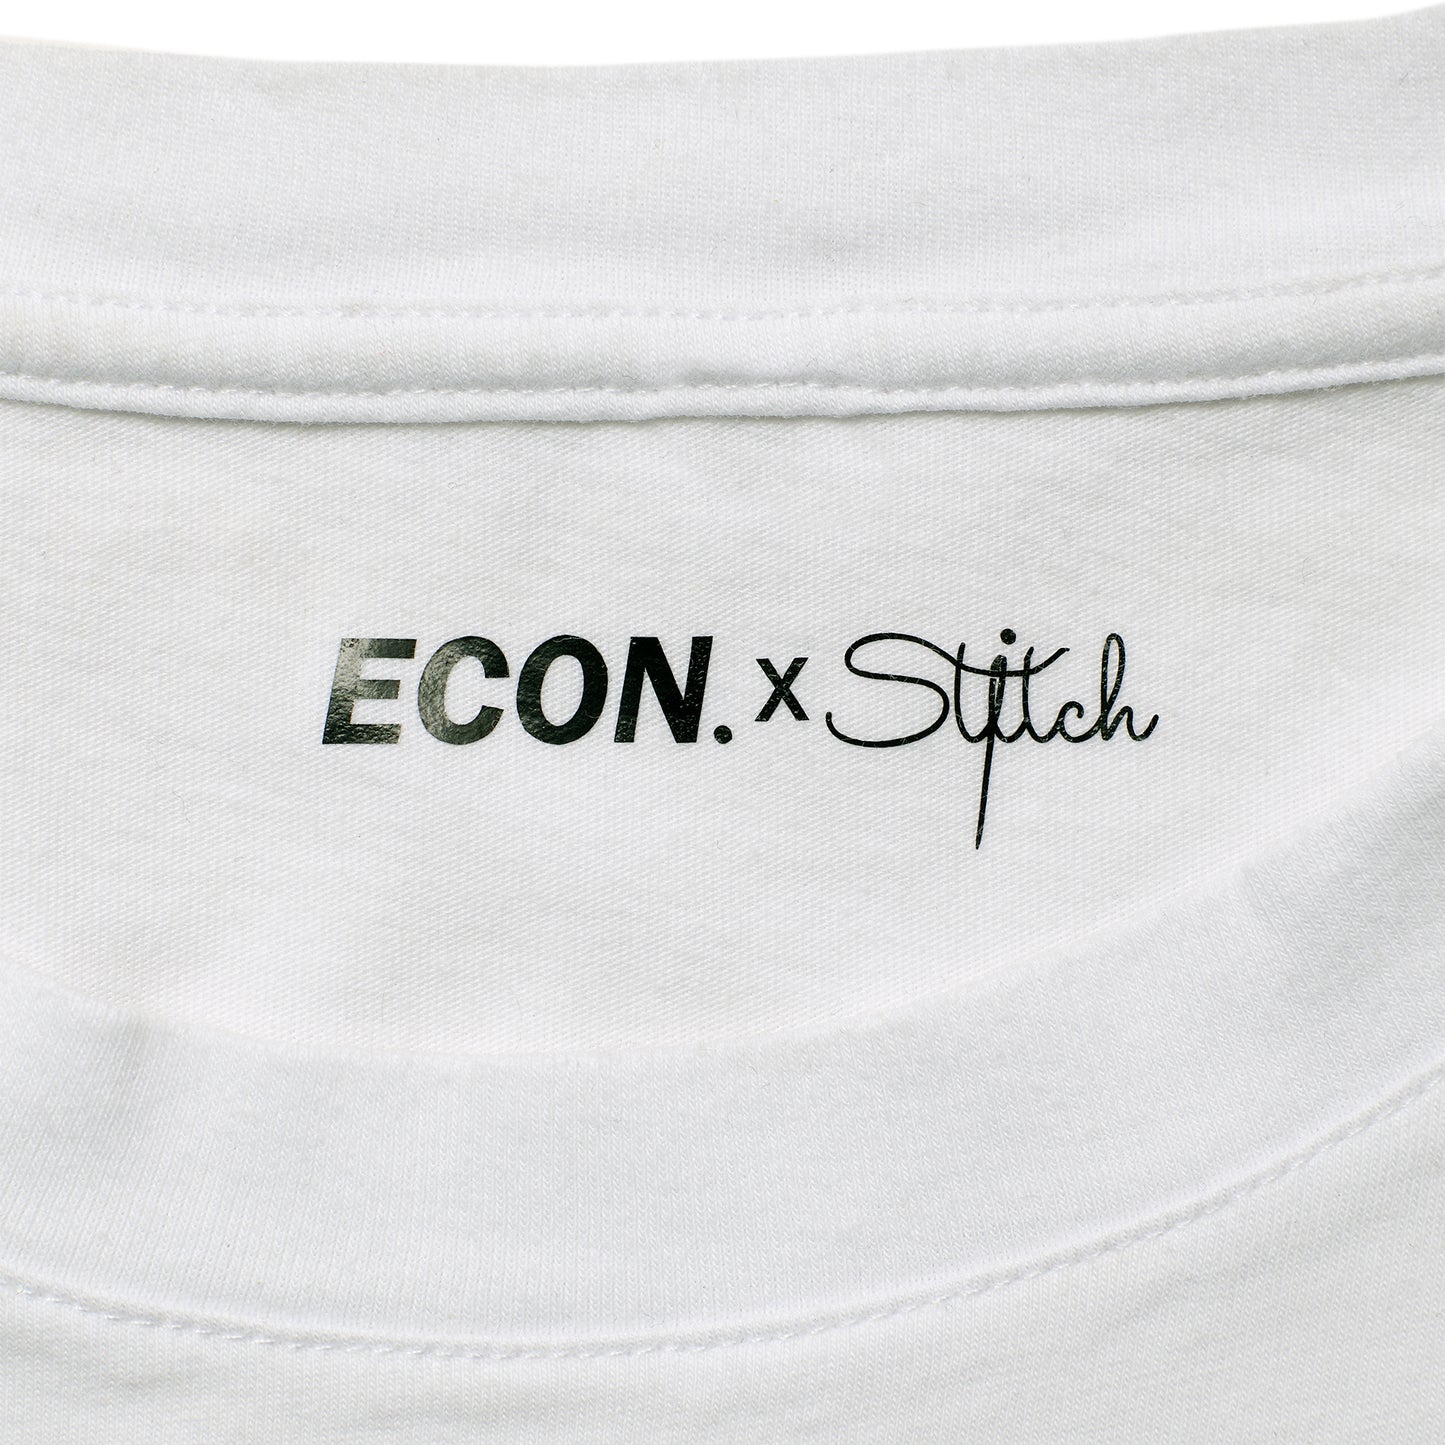 The Econ x Stitch white